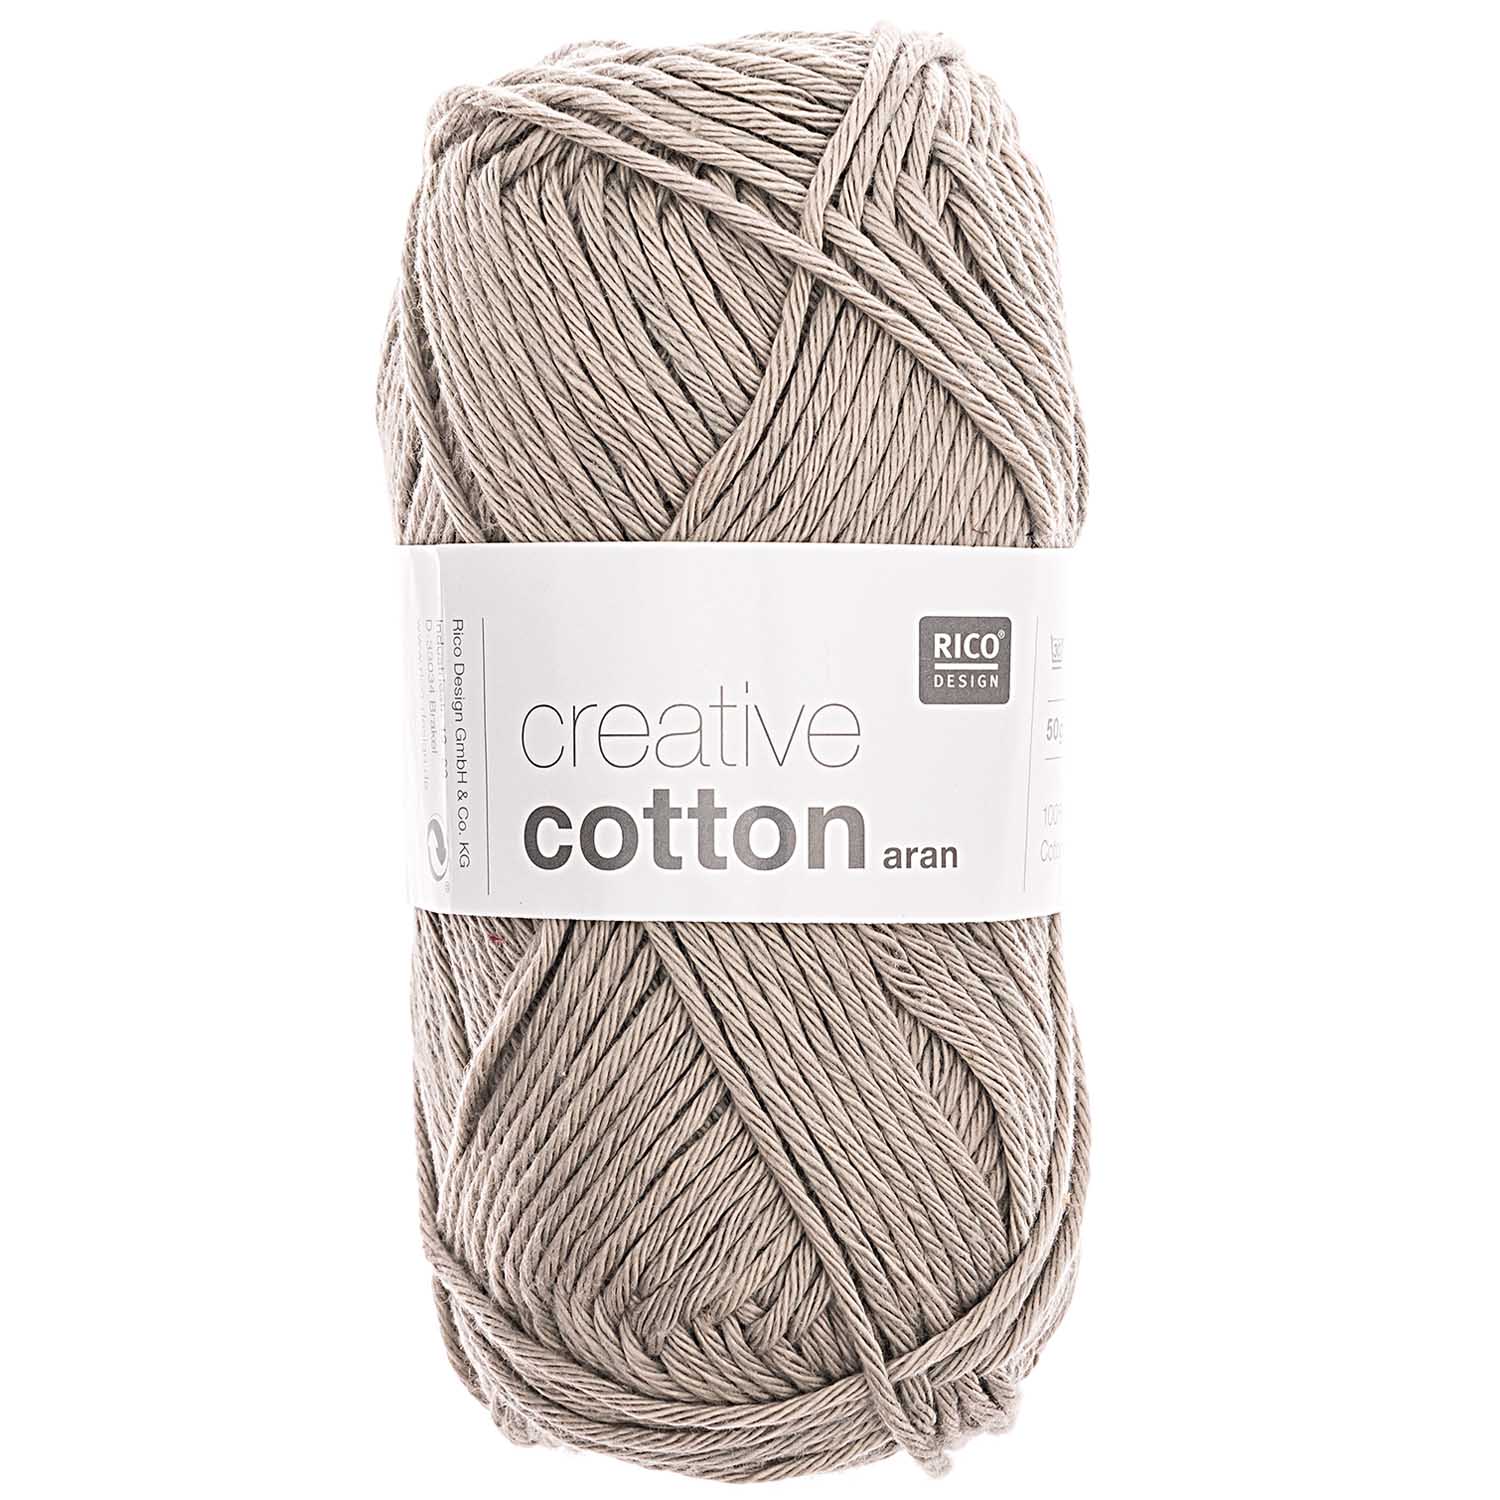 Creative Cotton Aran perlgrau